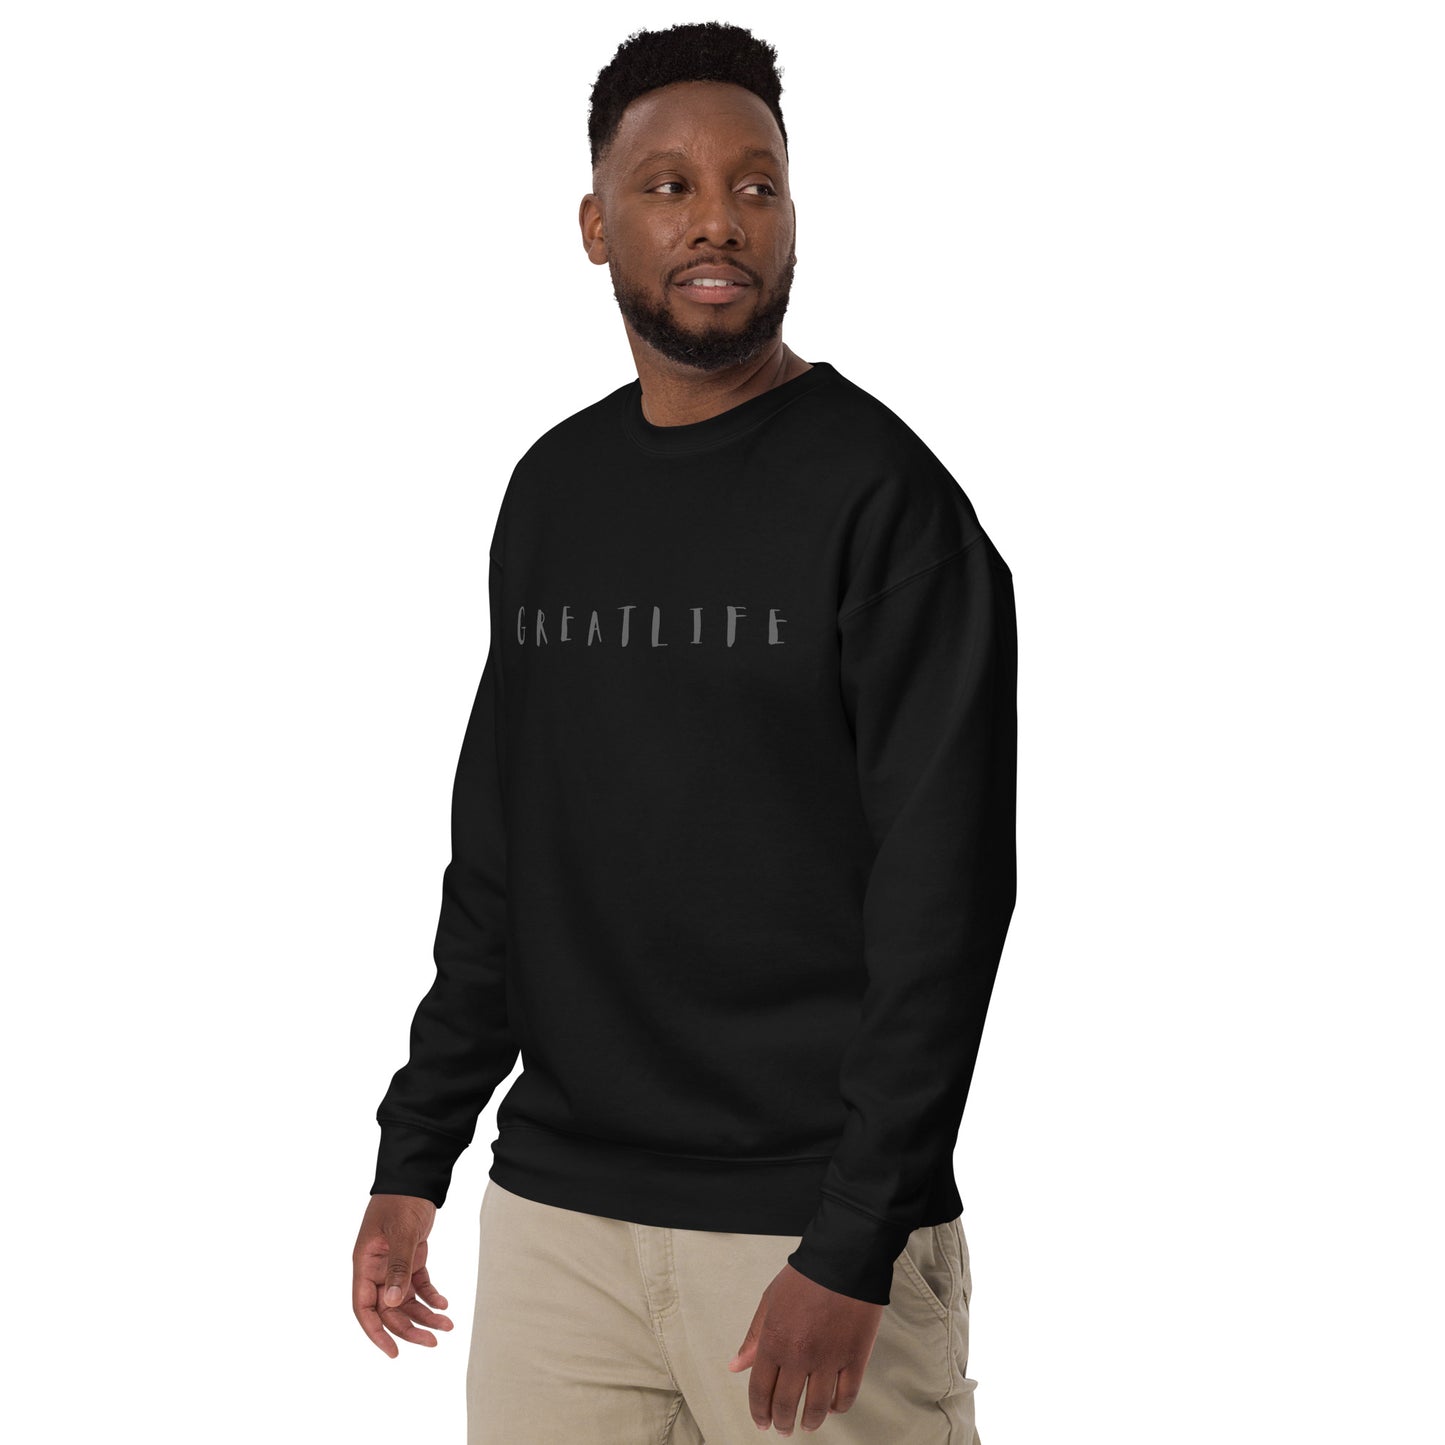 GREATLIFE Unisex Premium Sweatshirt